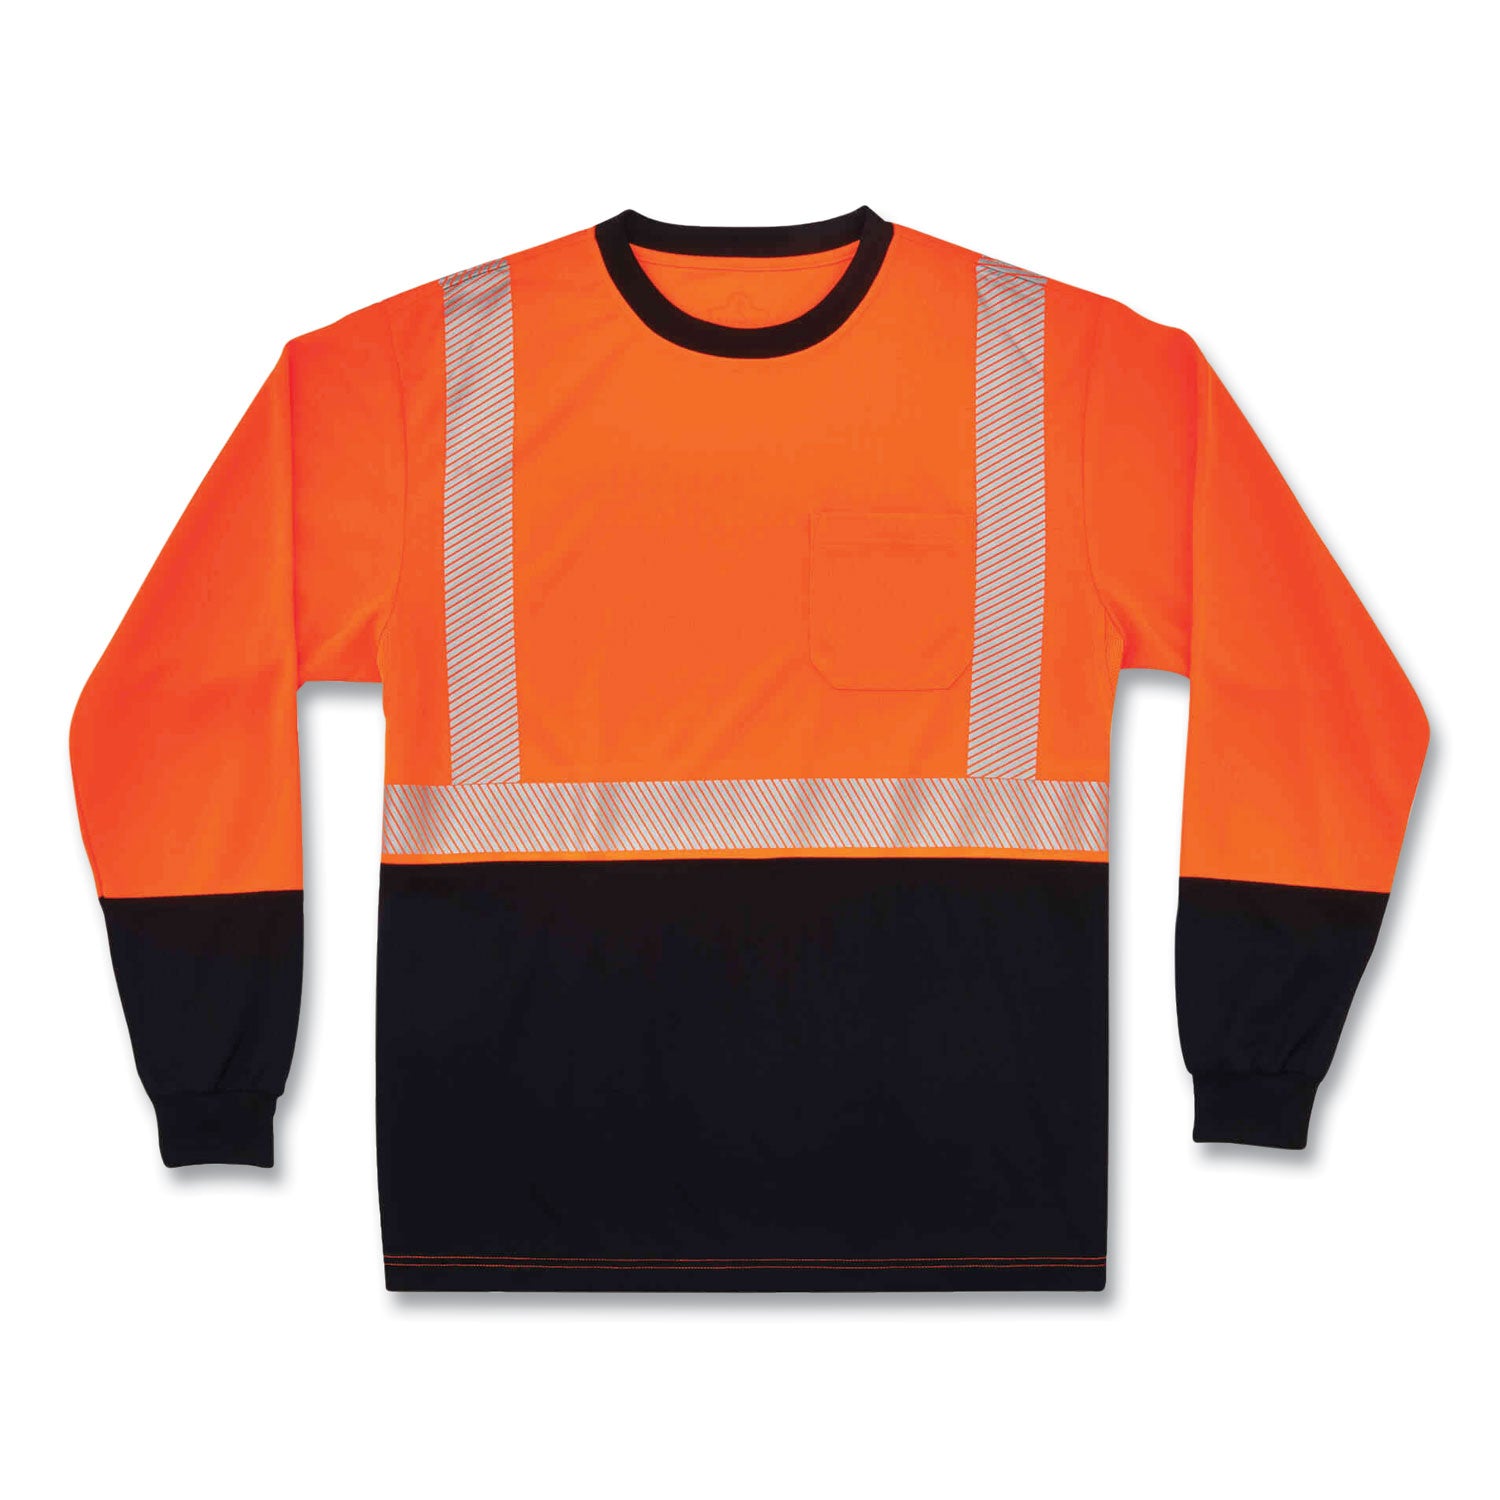 glowear-8281bk-class-2-long-sleeve-shirt-with-black-bottom-polyester-2x-large-orange-ships-in-1-3-business-days_ego22686 - 1